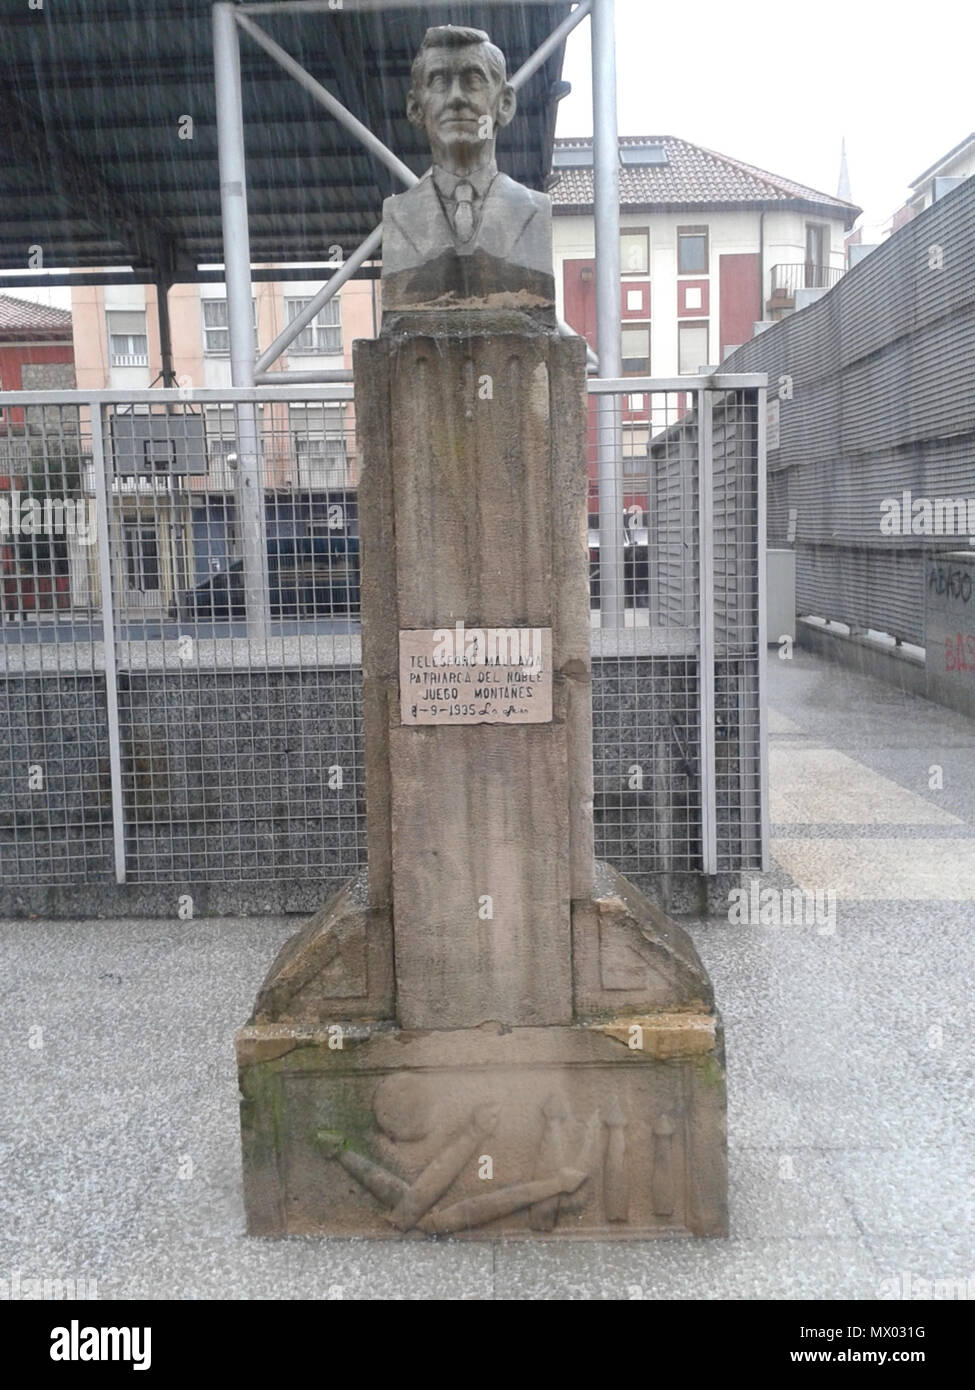 . Español: Busto de piedra ubicado en la plaza de la llama, torrelavega . 1 February 2015, 14:18:39. oscar mallavia 106 Busto de Telesforo Mallavia Stock Photo